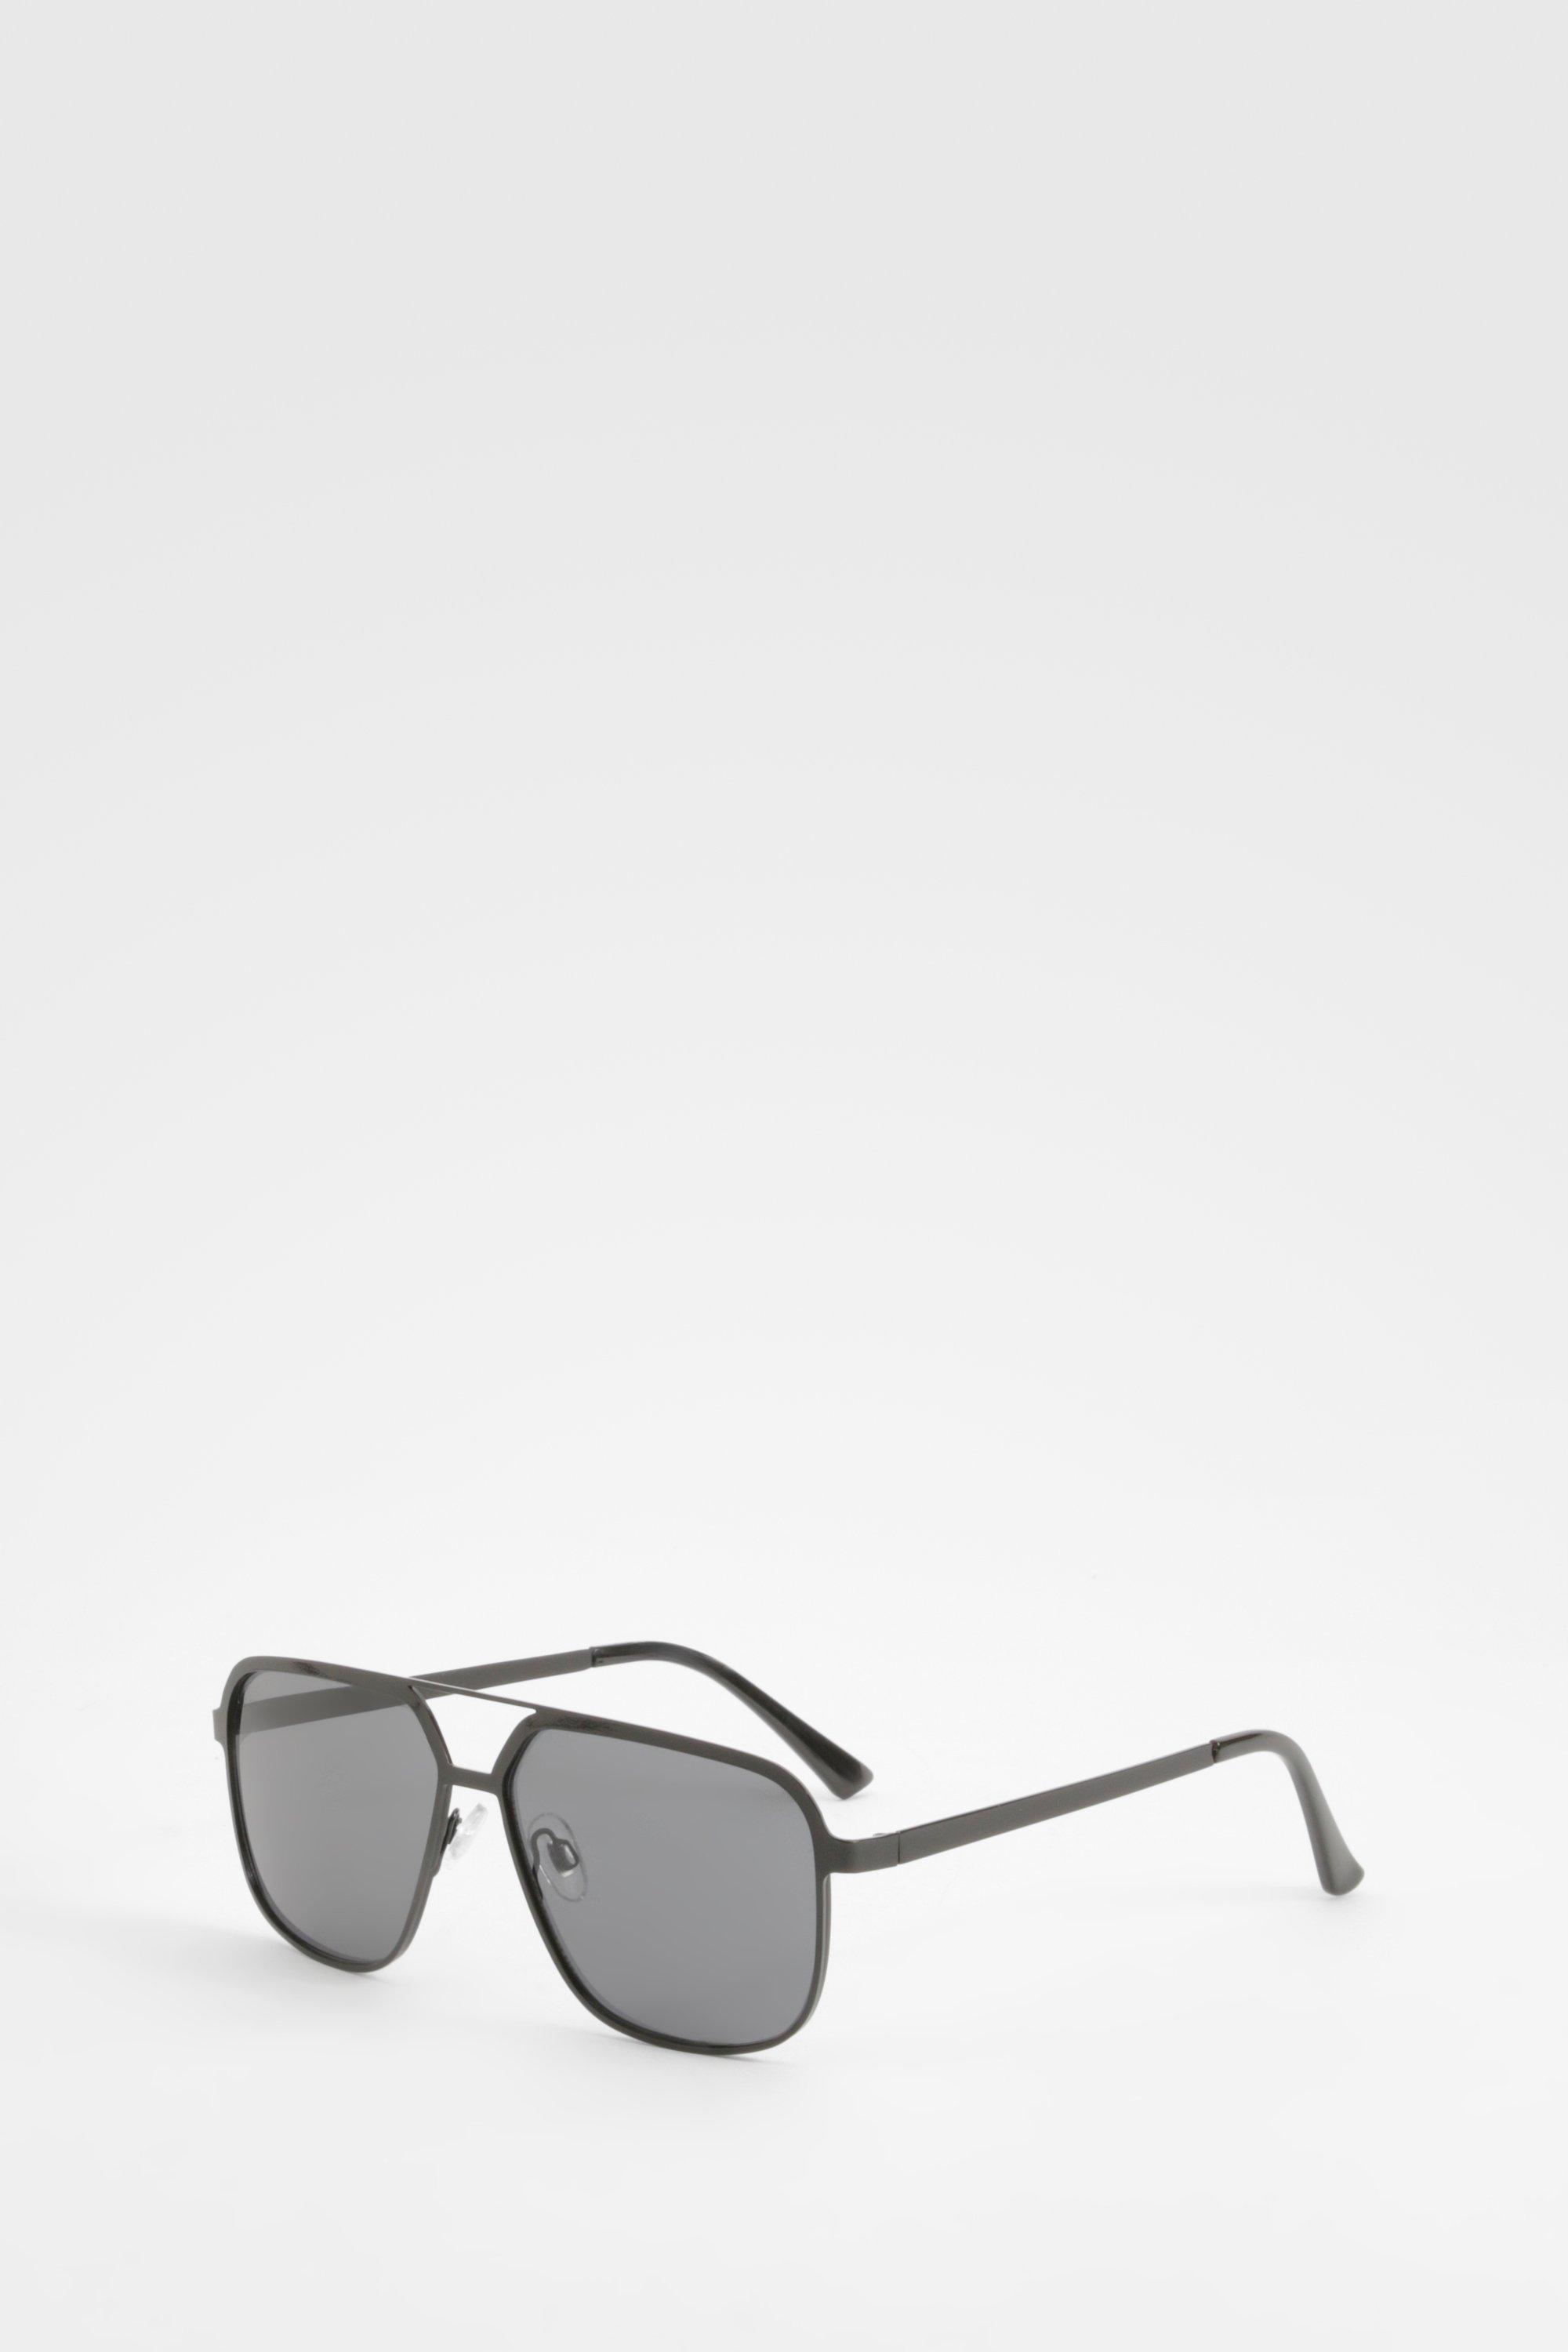 Image of Black Tinted Oversized Aviator Sunglasses, Nero